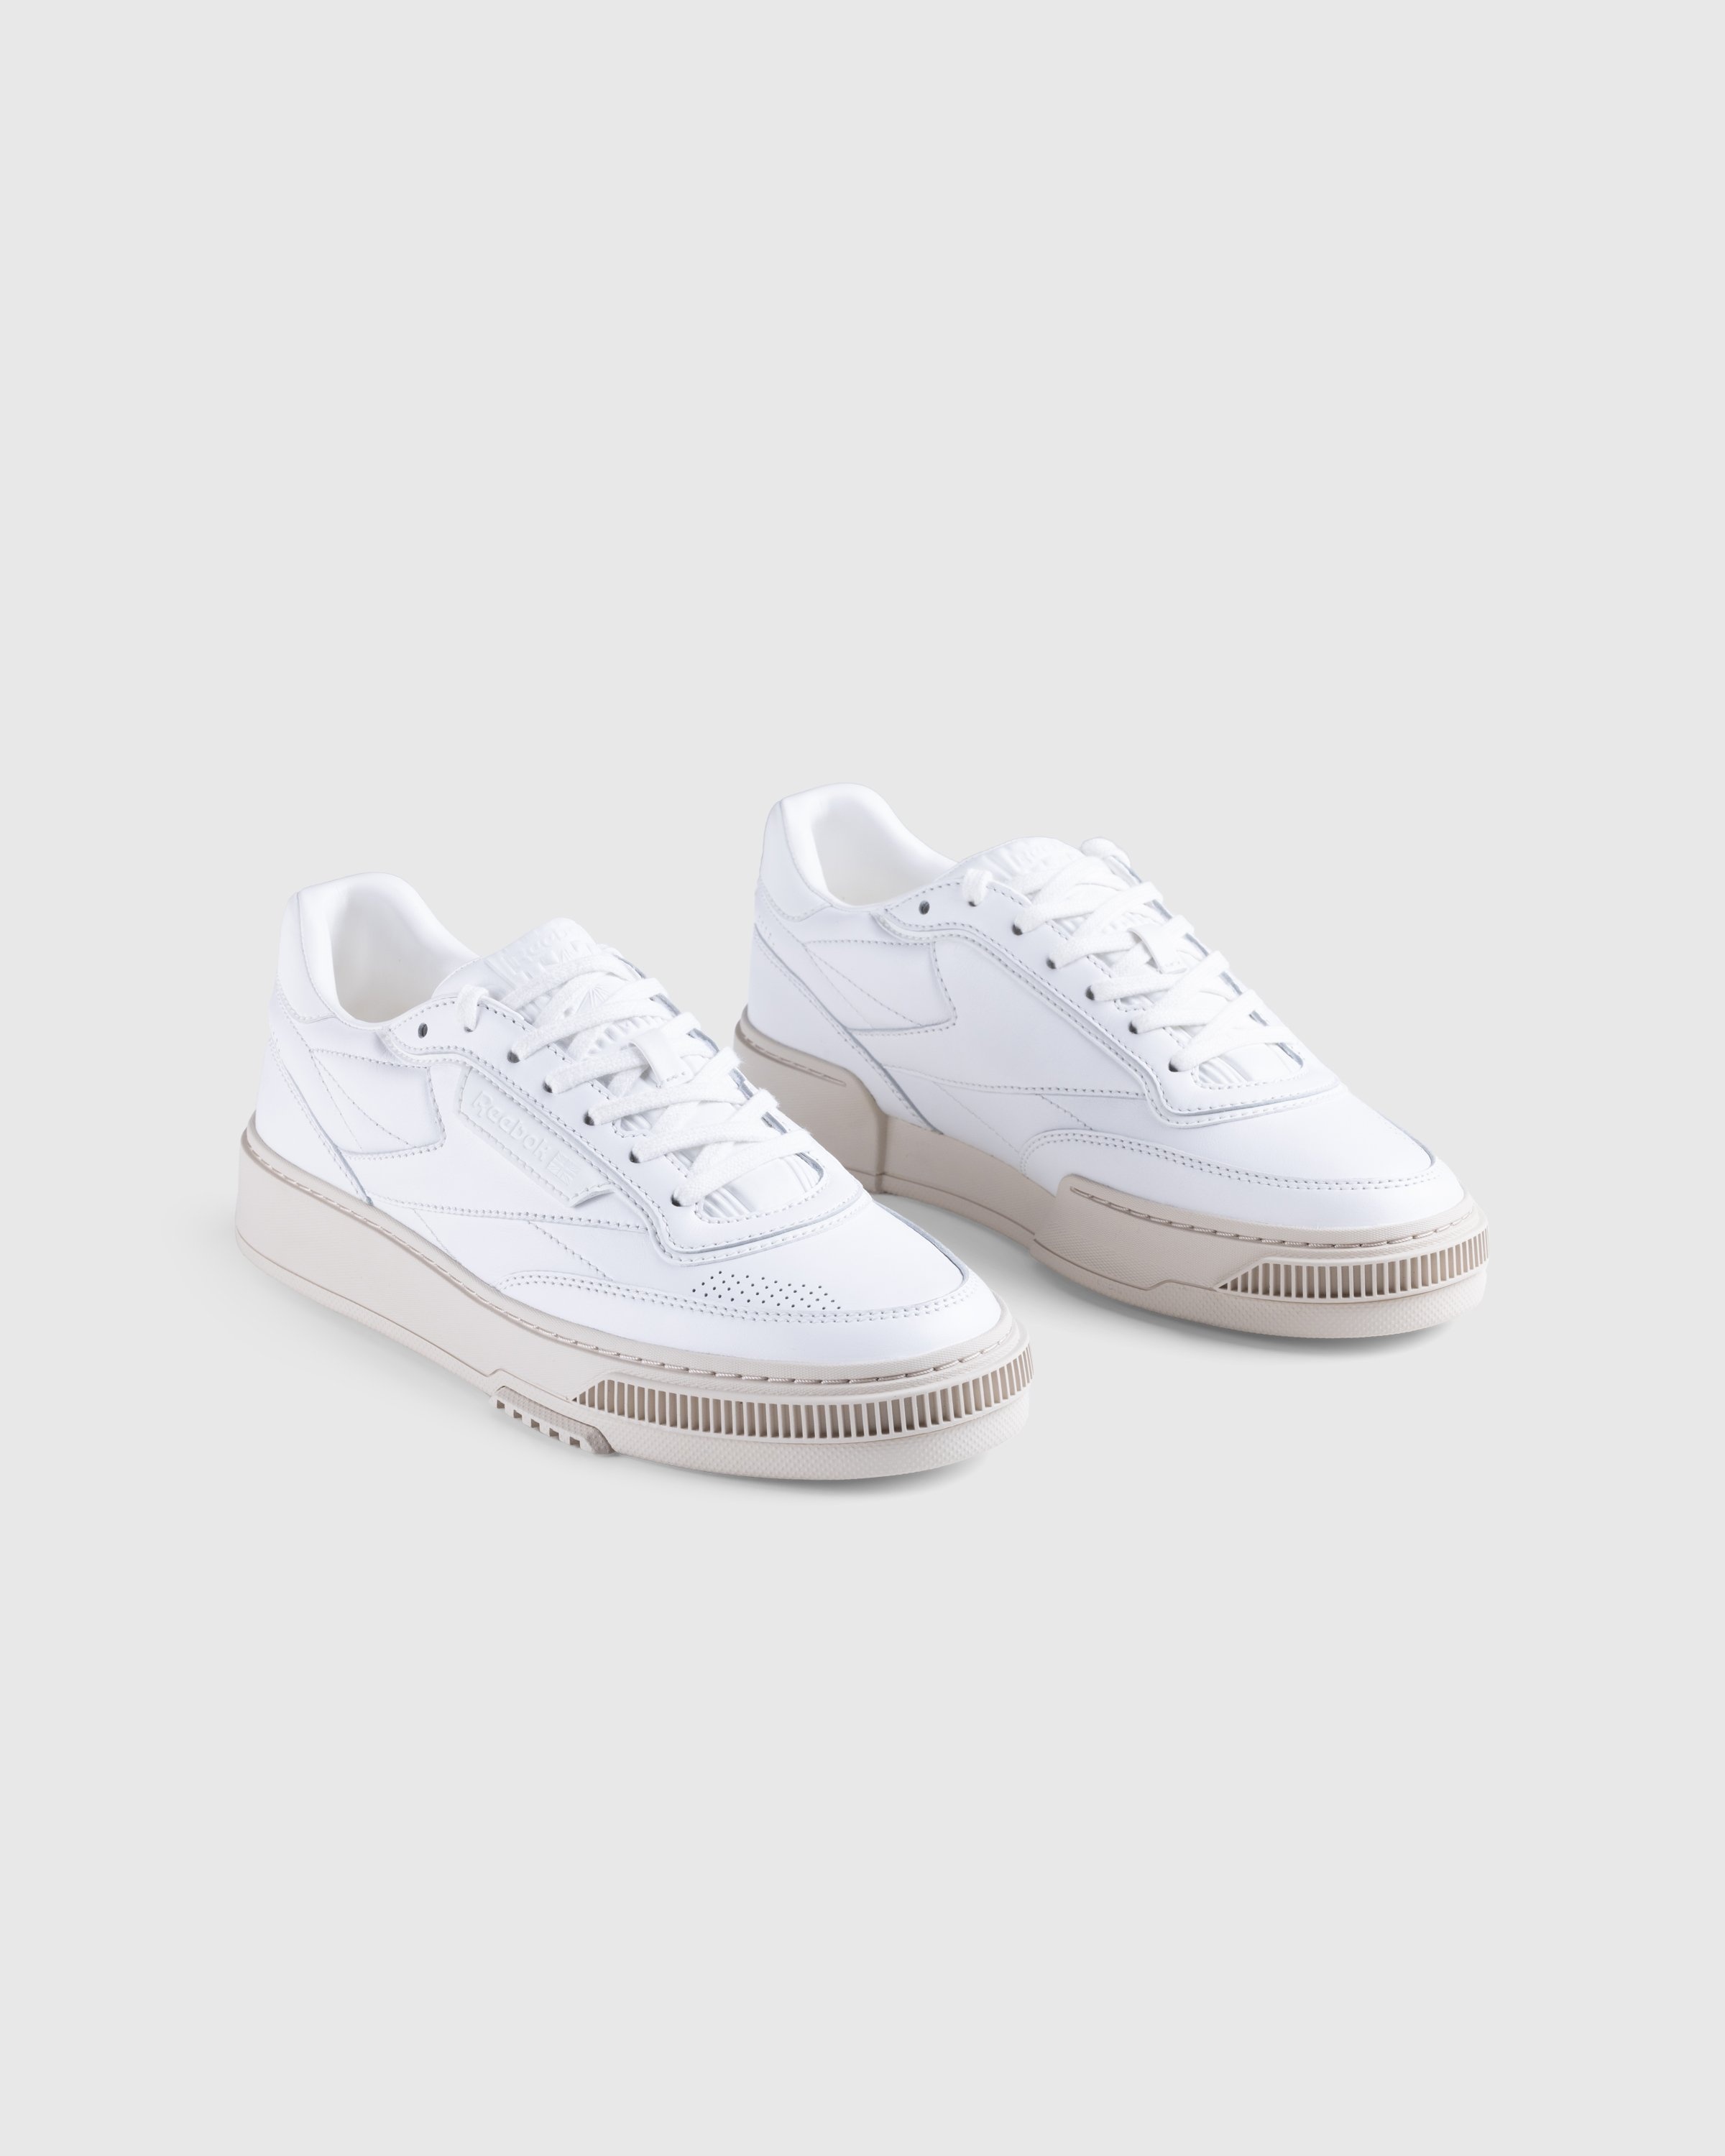 Reebok LTD – CLUB C LTD Leather White  - Sneakers - White - Image 3